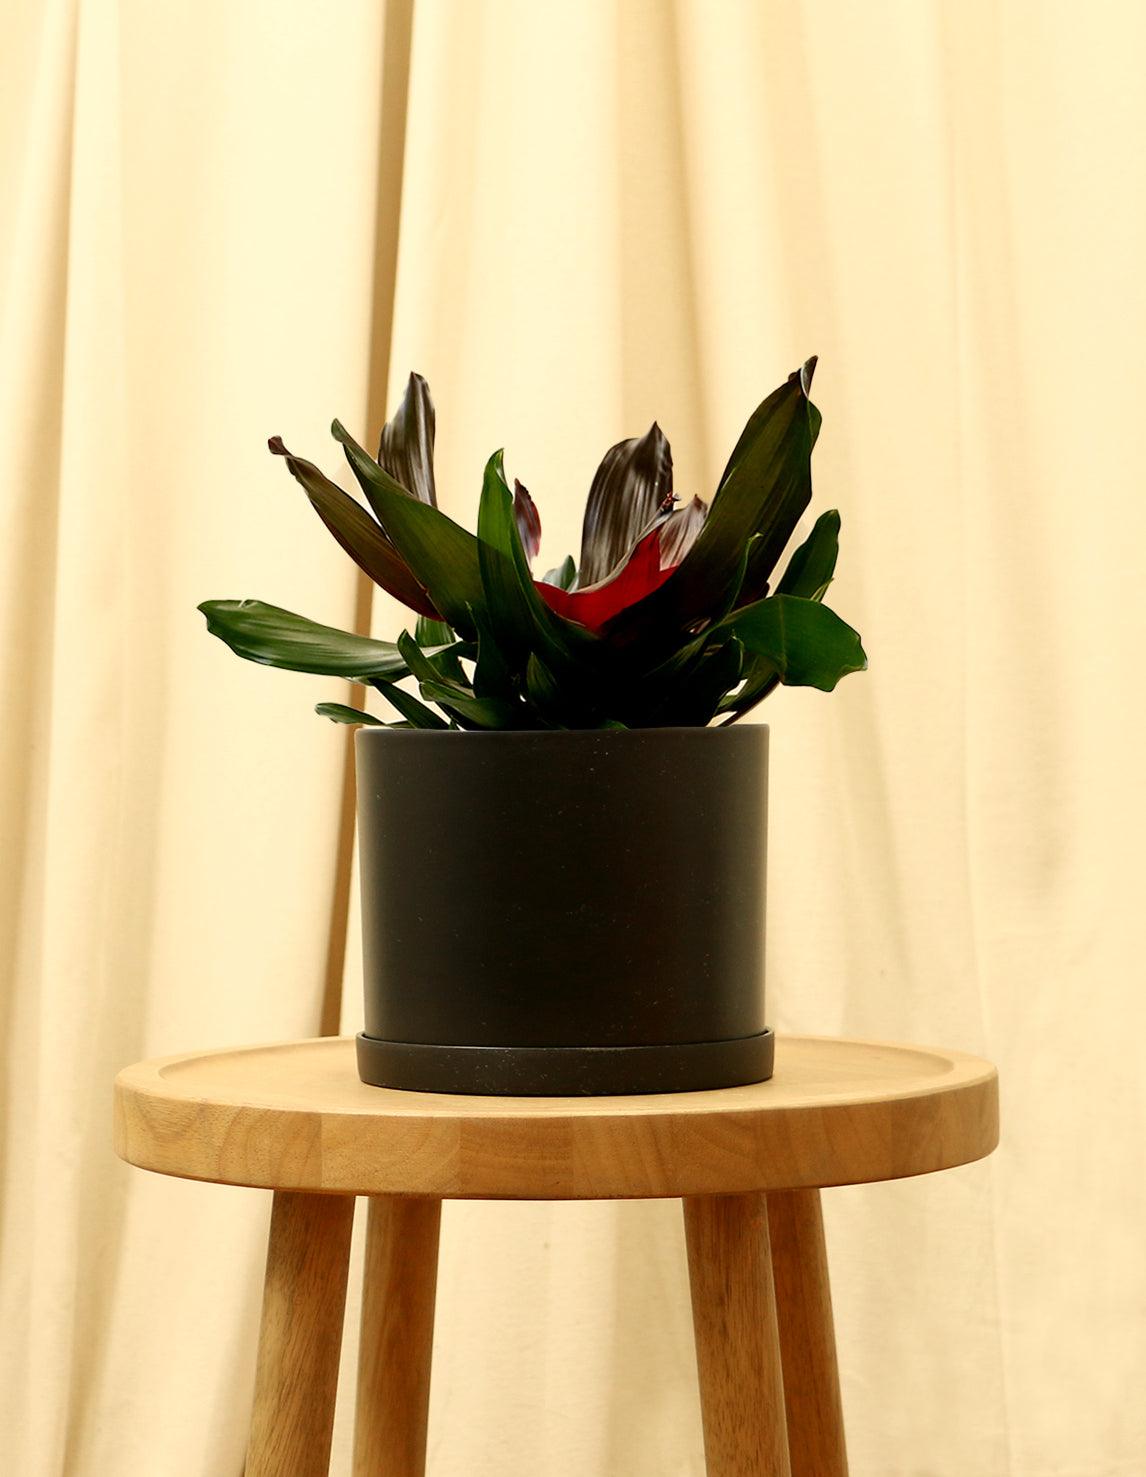 Medium Neoregelia Carolinae - Blushing Bromeliad in black pot.